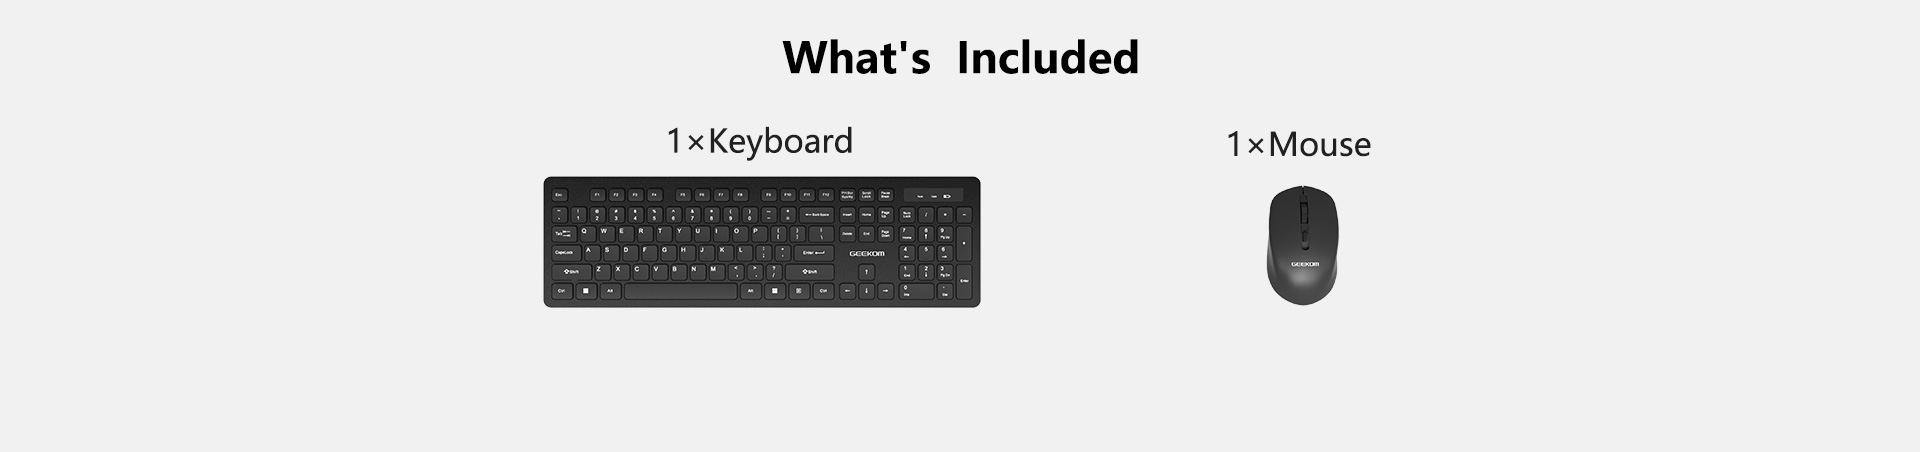 Geekom keyboard and mouse